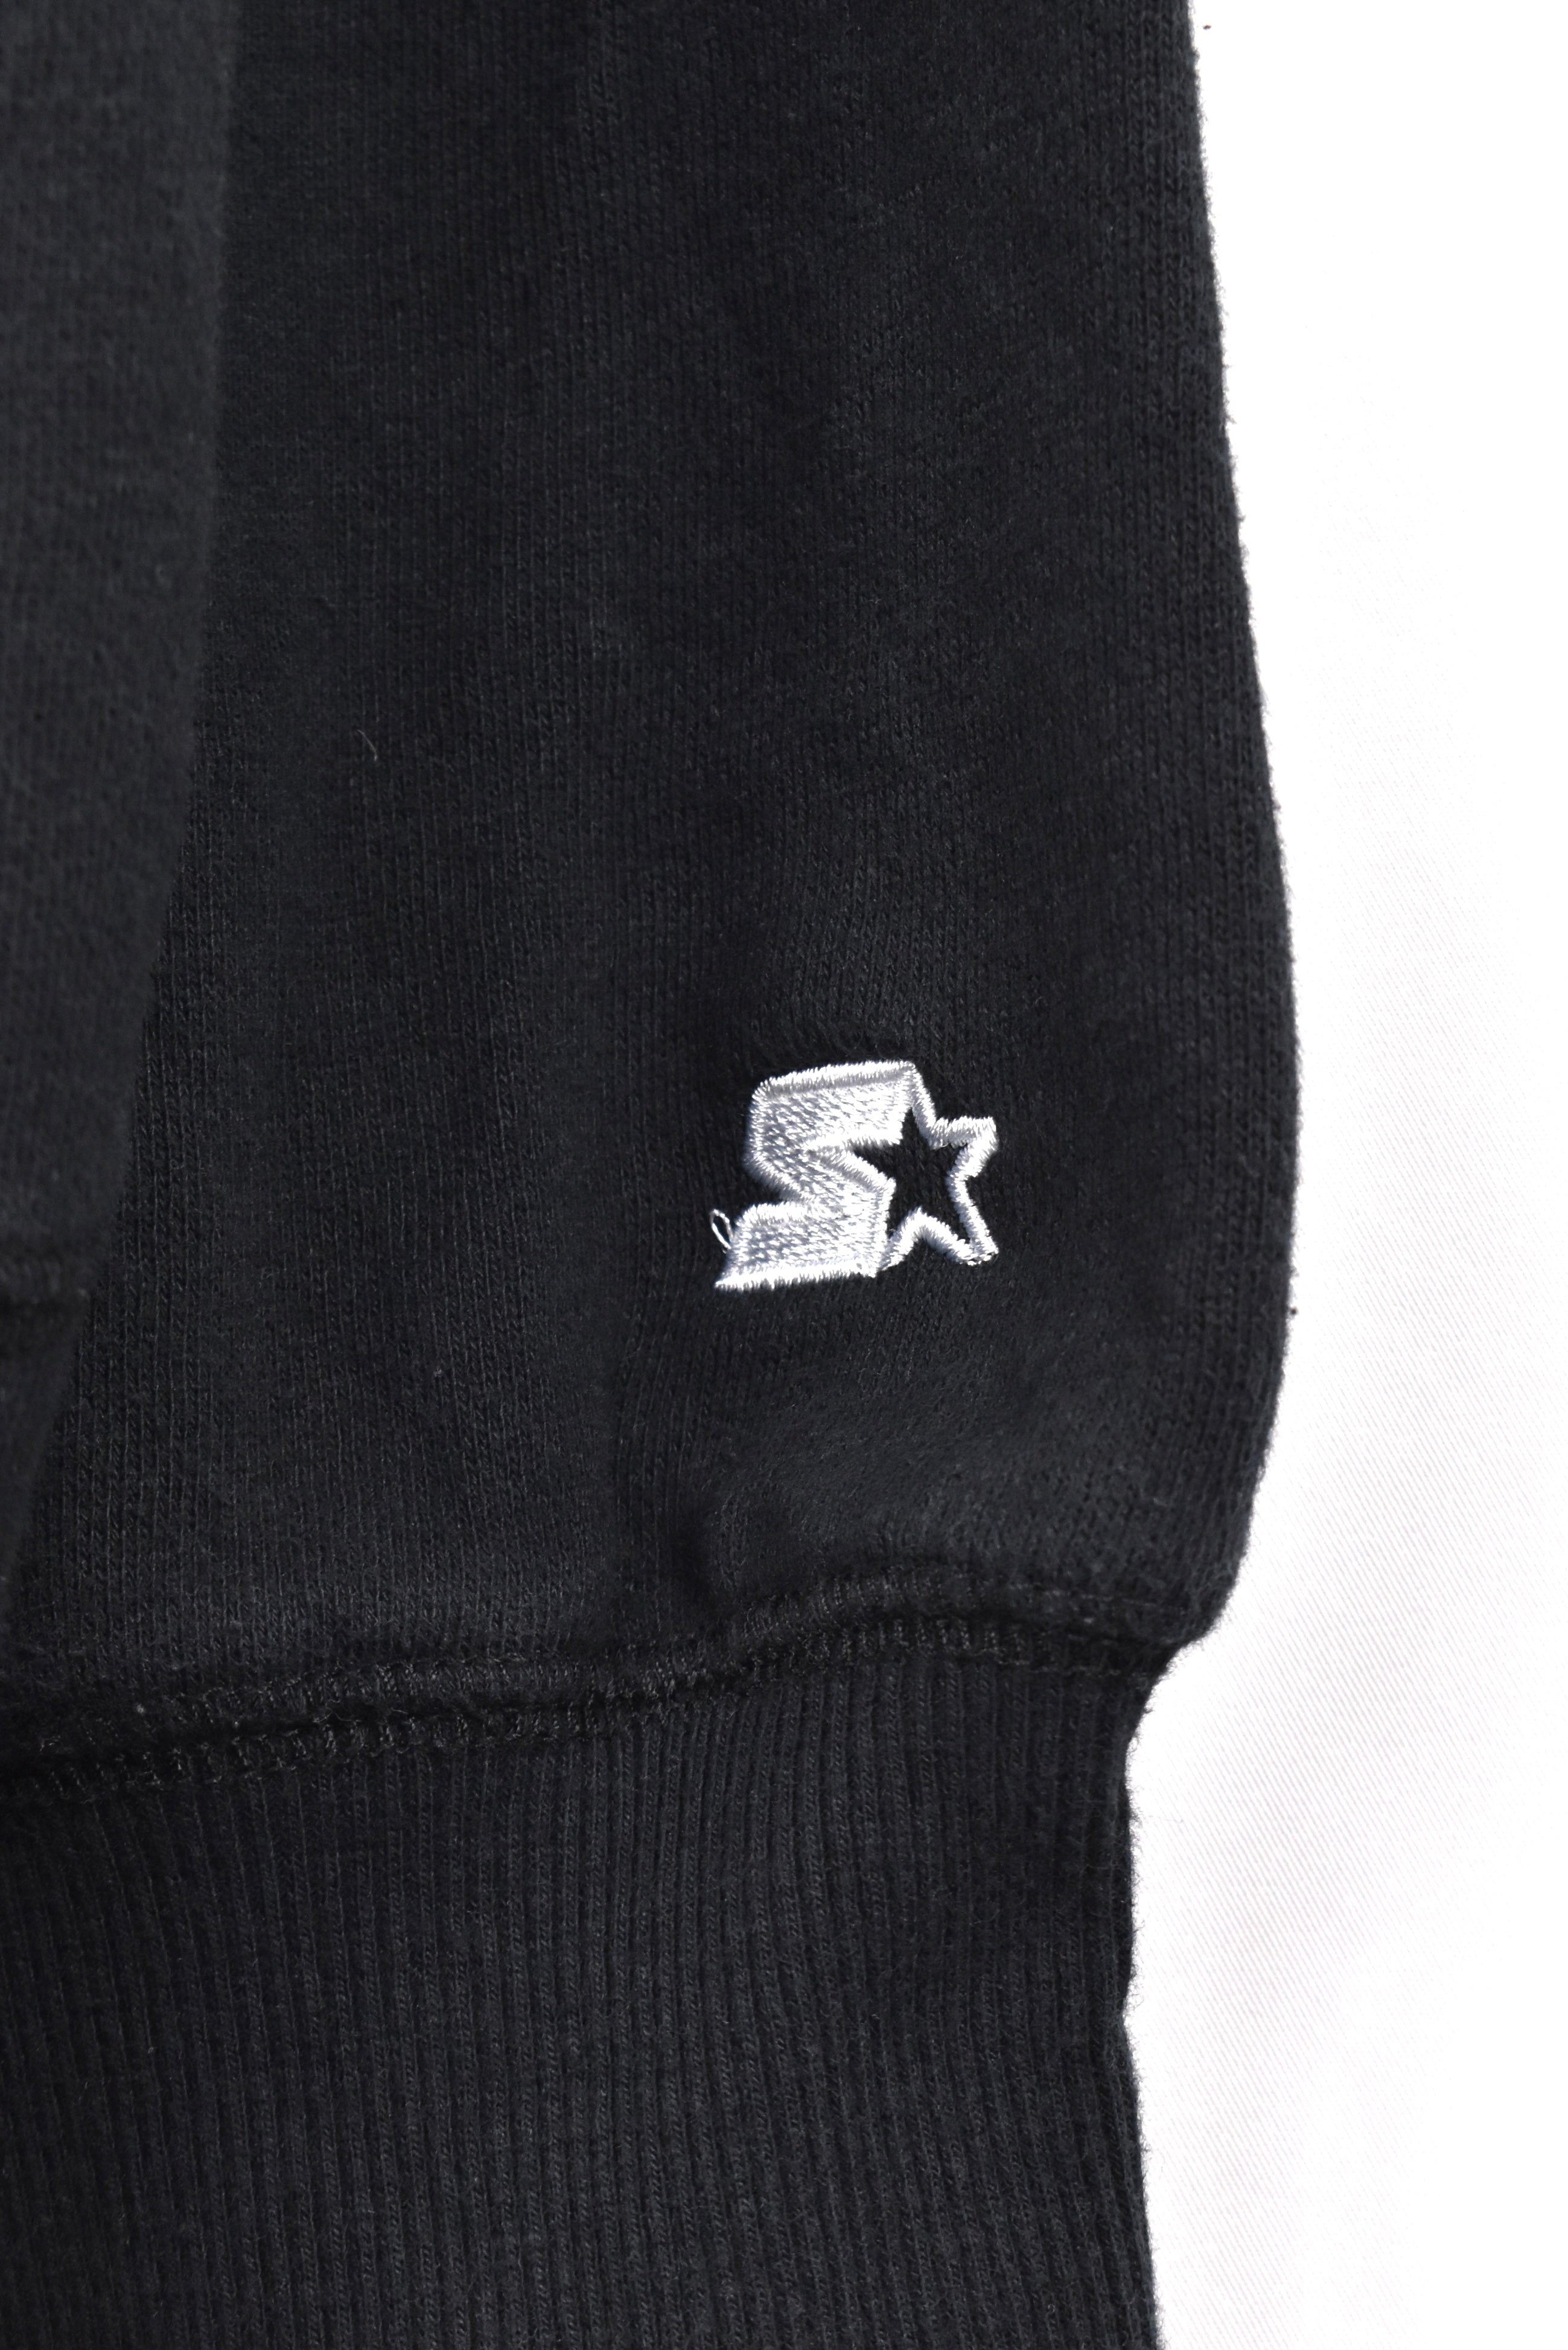 Vintage Starter hoodie, black graphic sweatshirt - AU Large STARTER